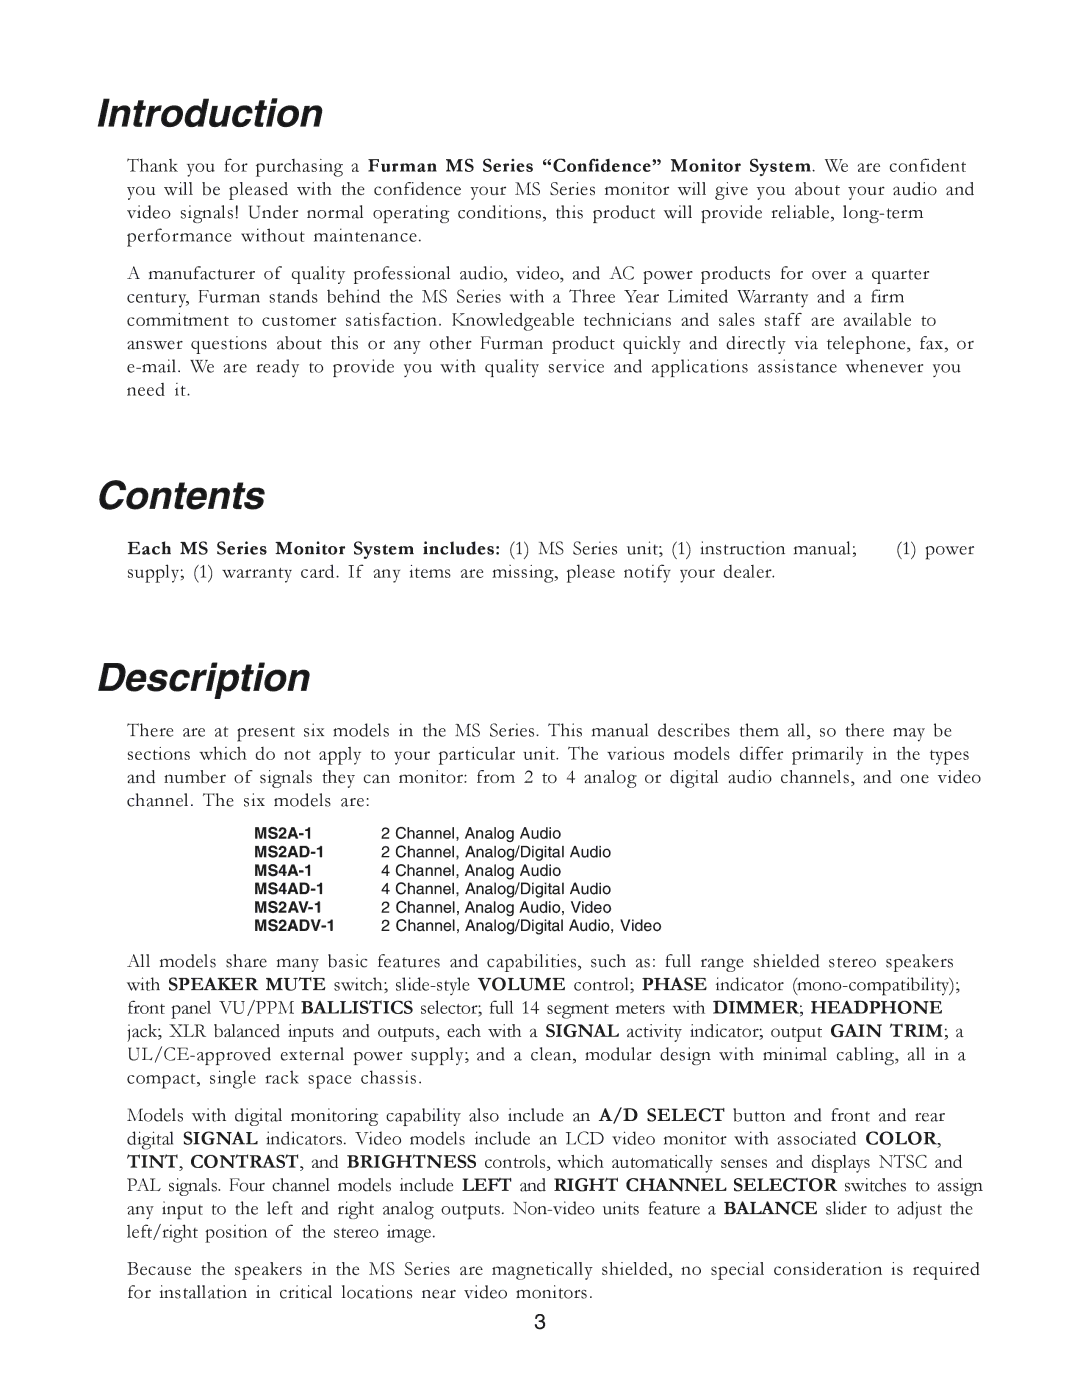 Furman Sound MS2A-1 owner manual Introduction, Contents, Description 